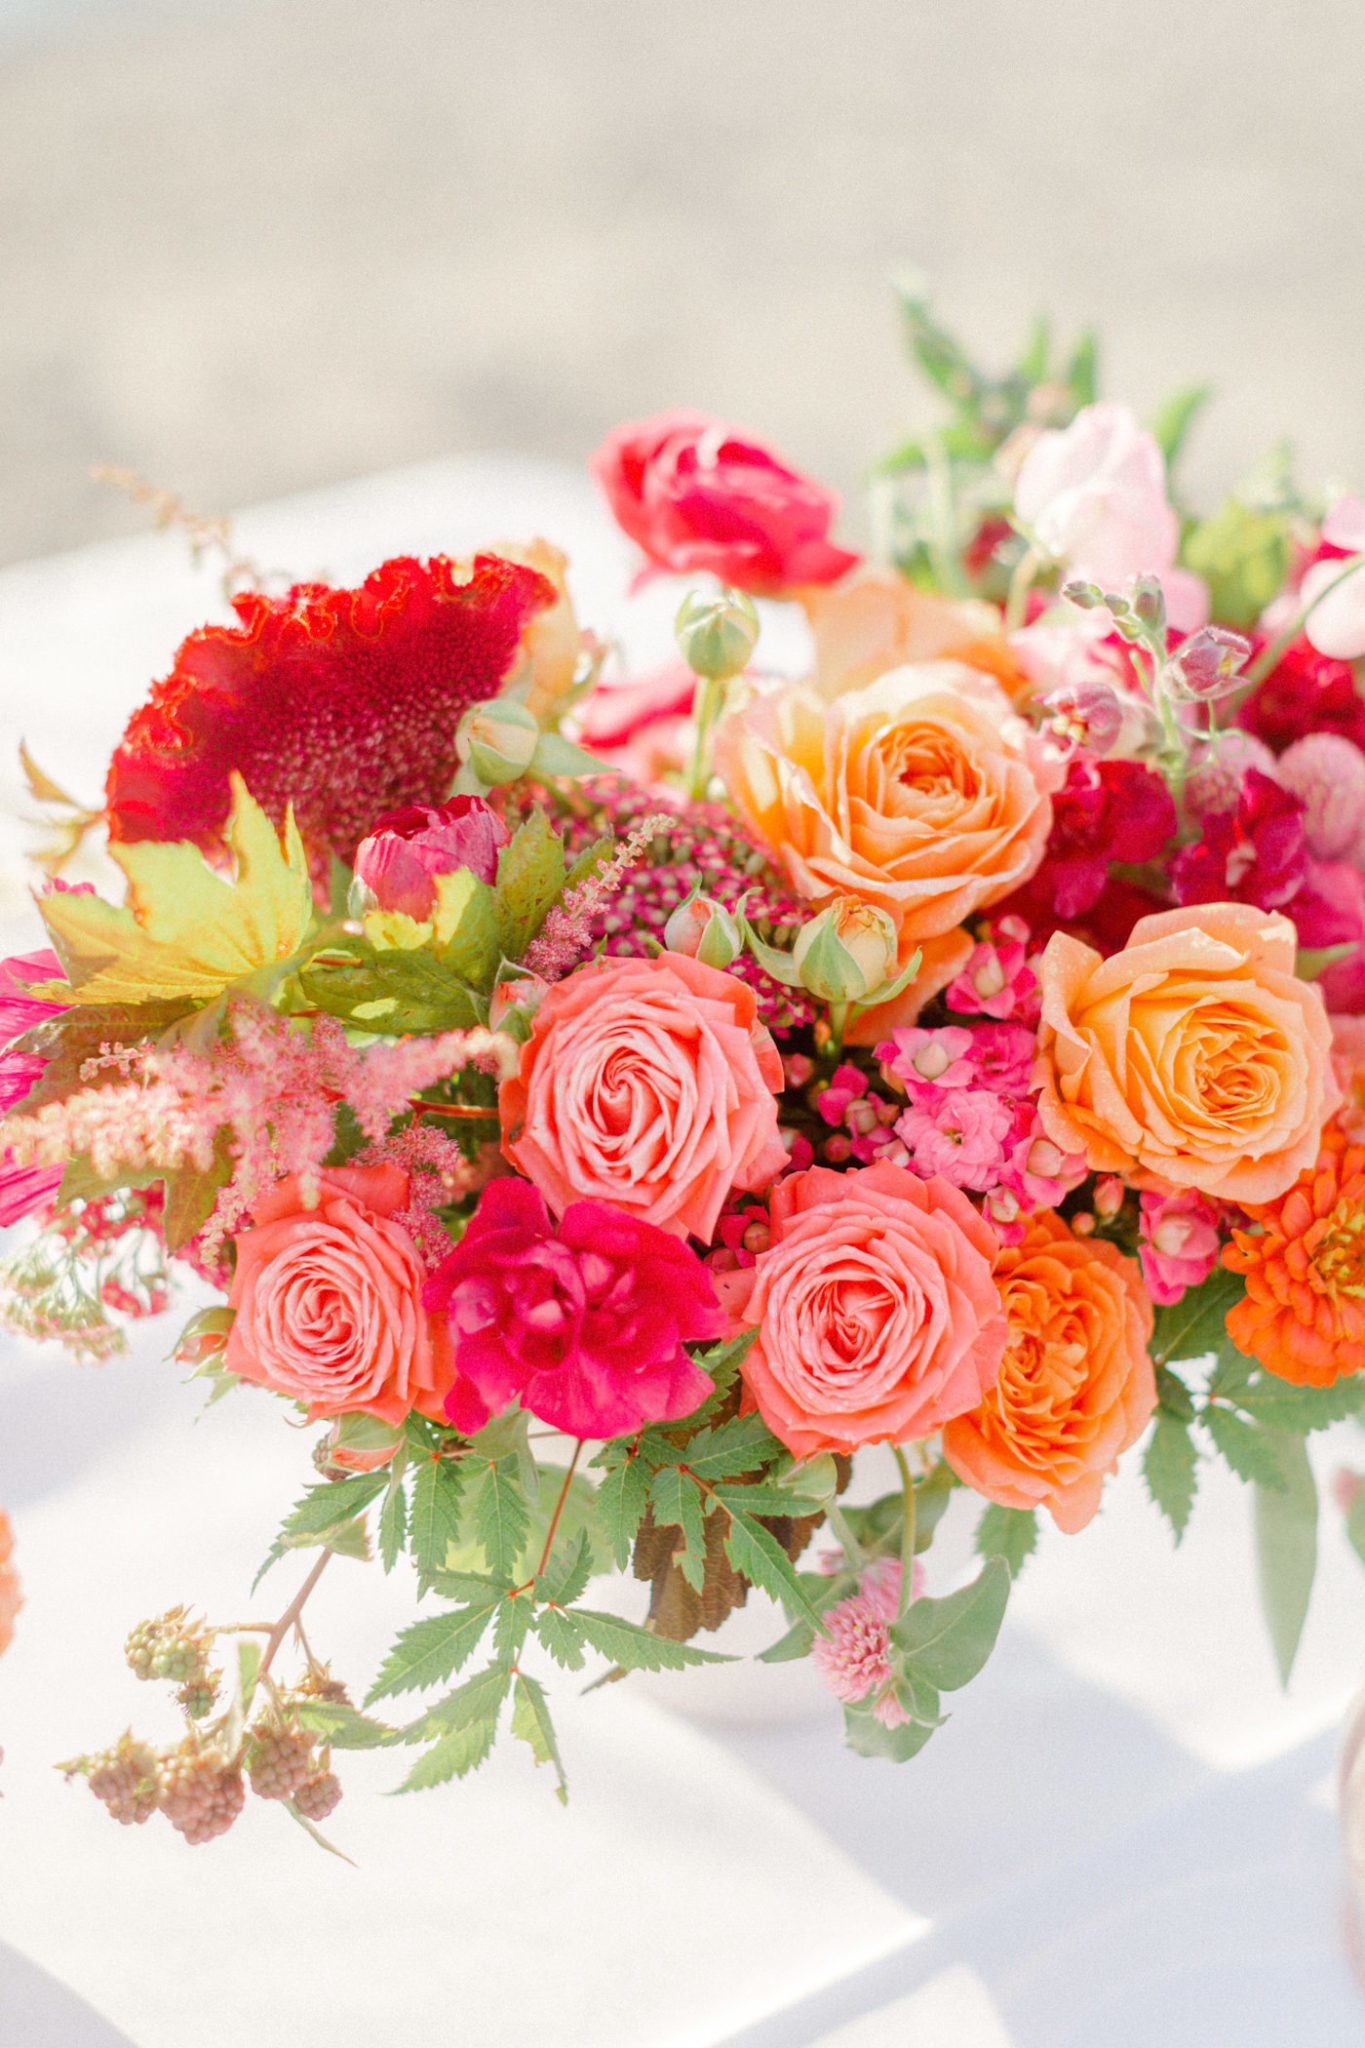 Wedding floral arrangement with pink, red, blush and orange florals